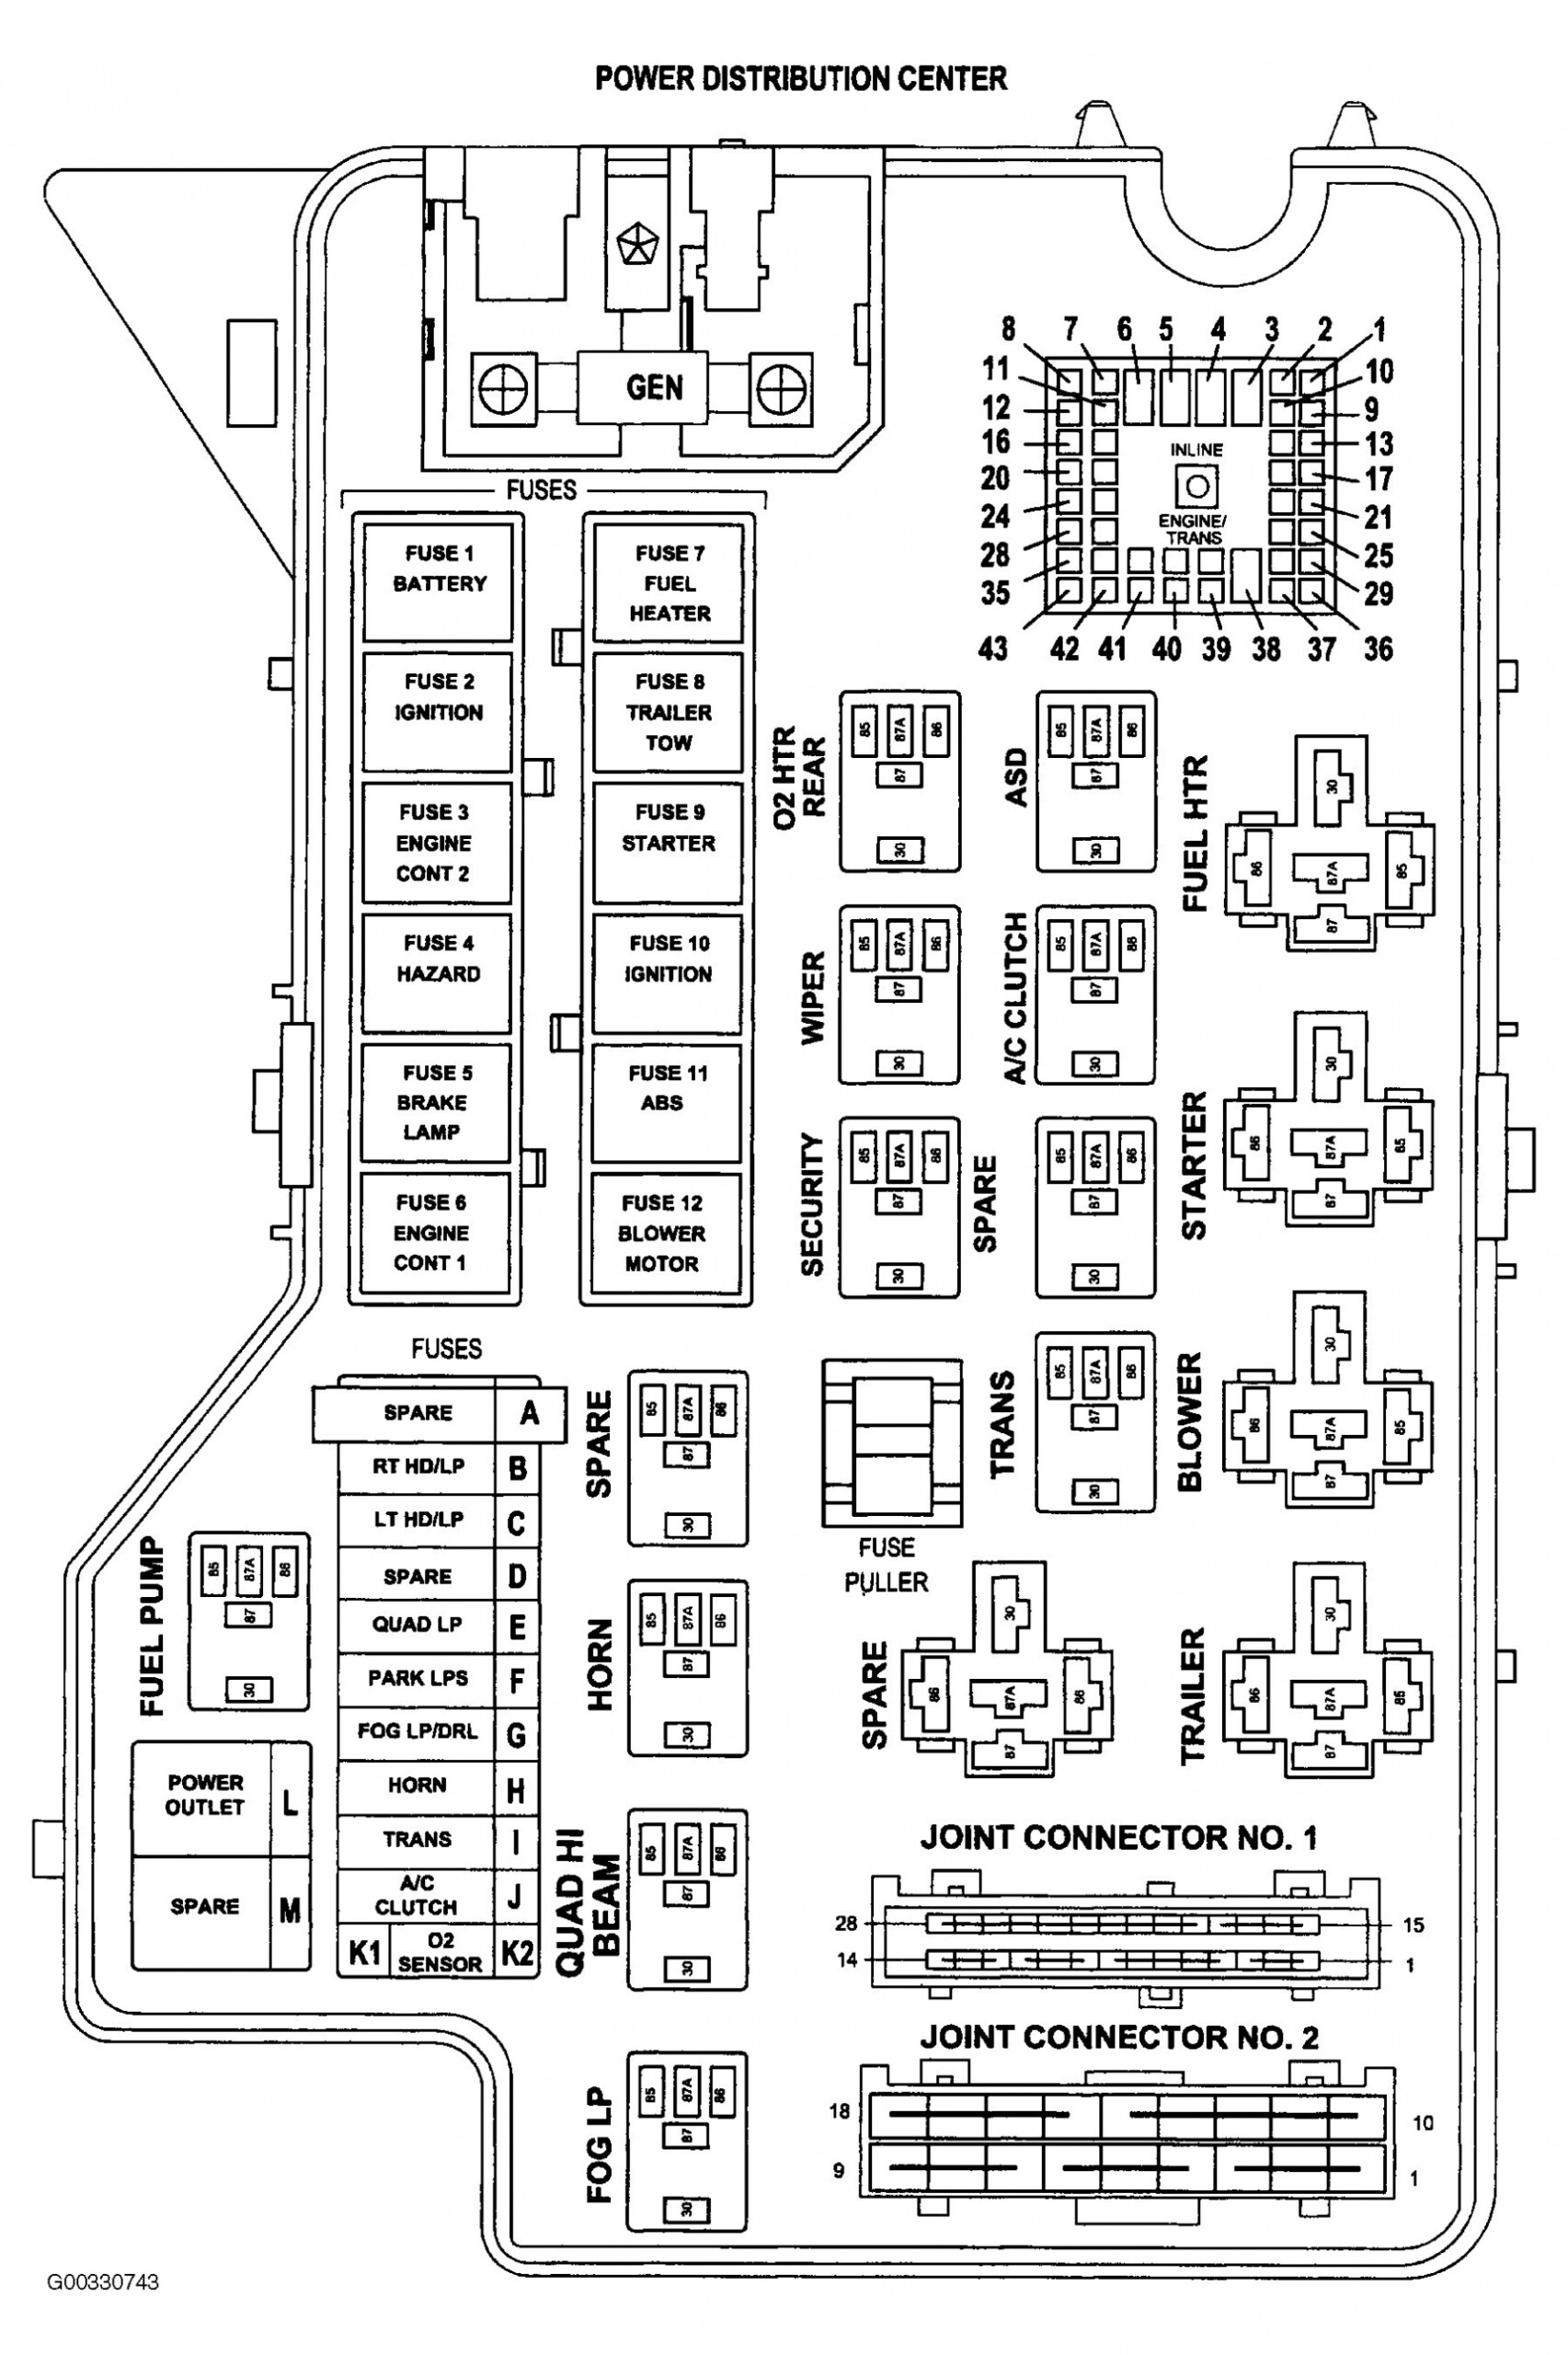 2014 Dodge Ram Wiring Diagram Cadician s Blog - Ram 1500 Oem Stereo Wiring Diagram